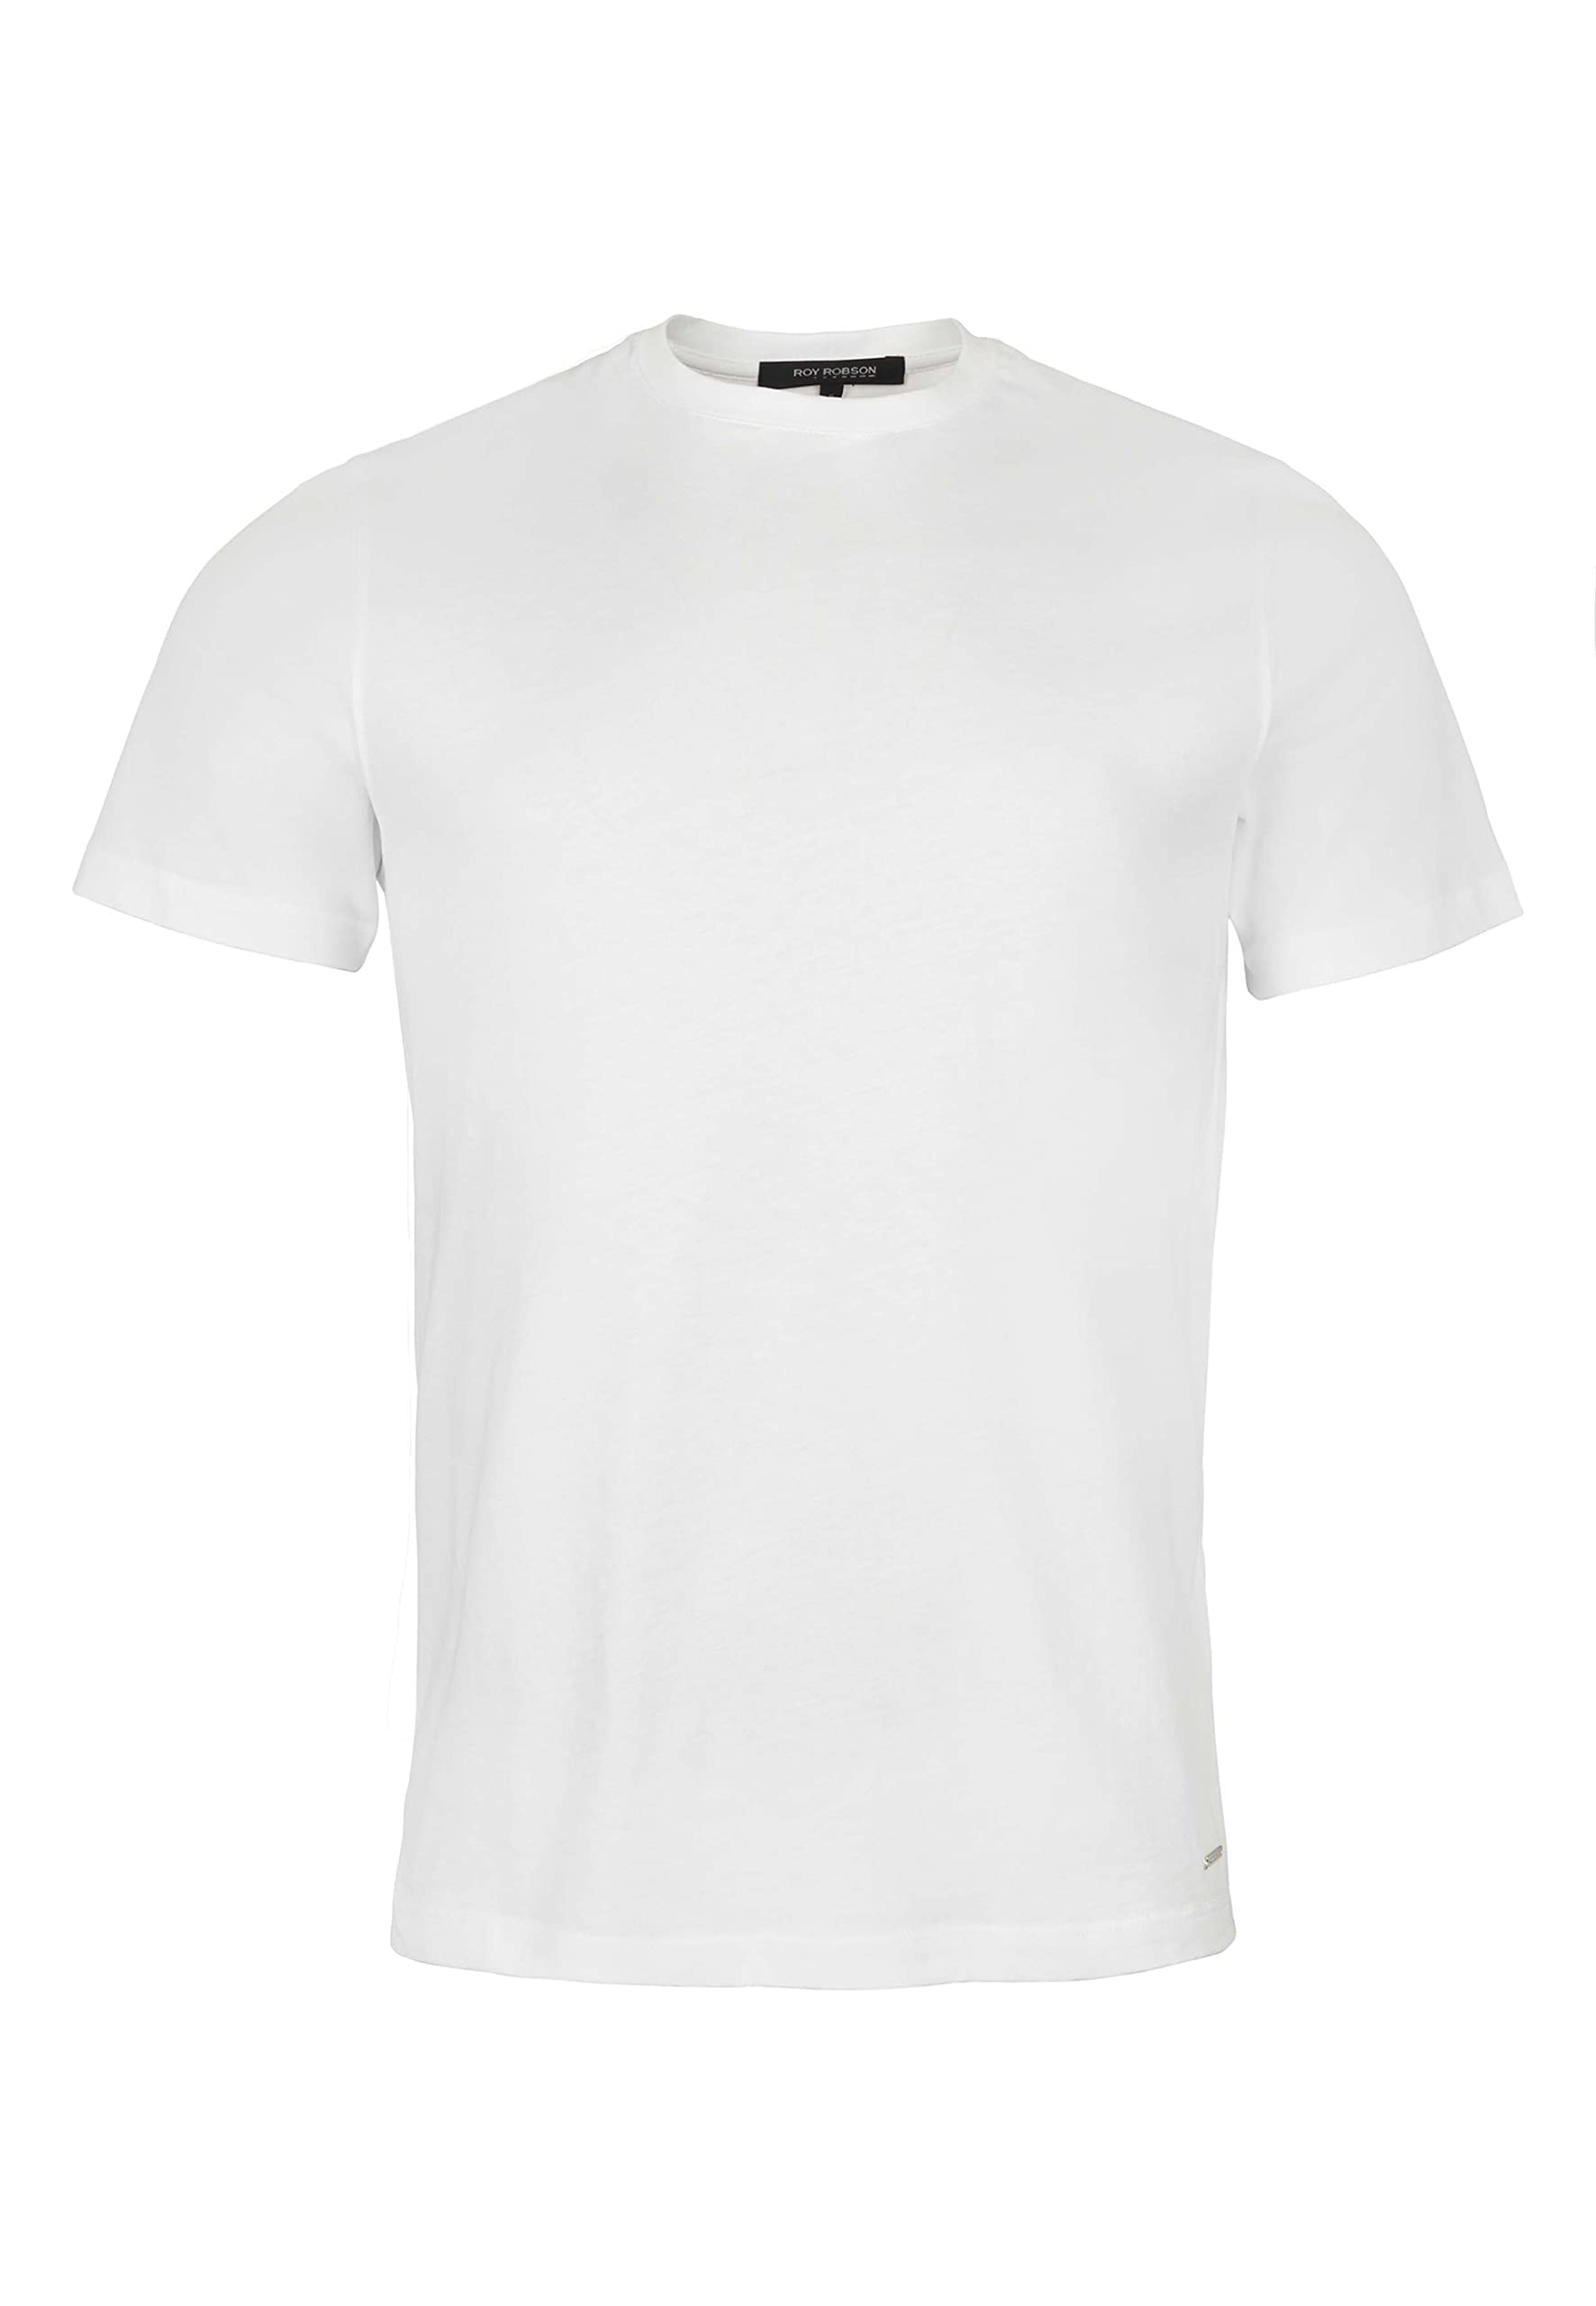 Roy Robson Herren T-Shirt (White, M)